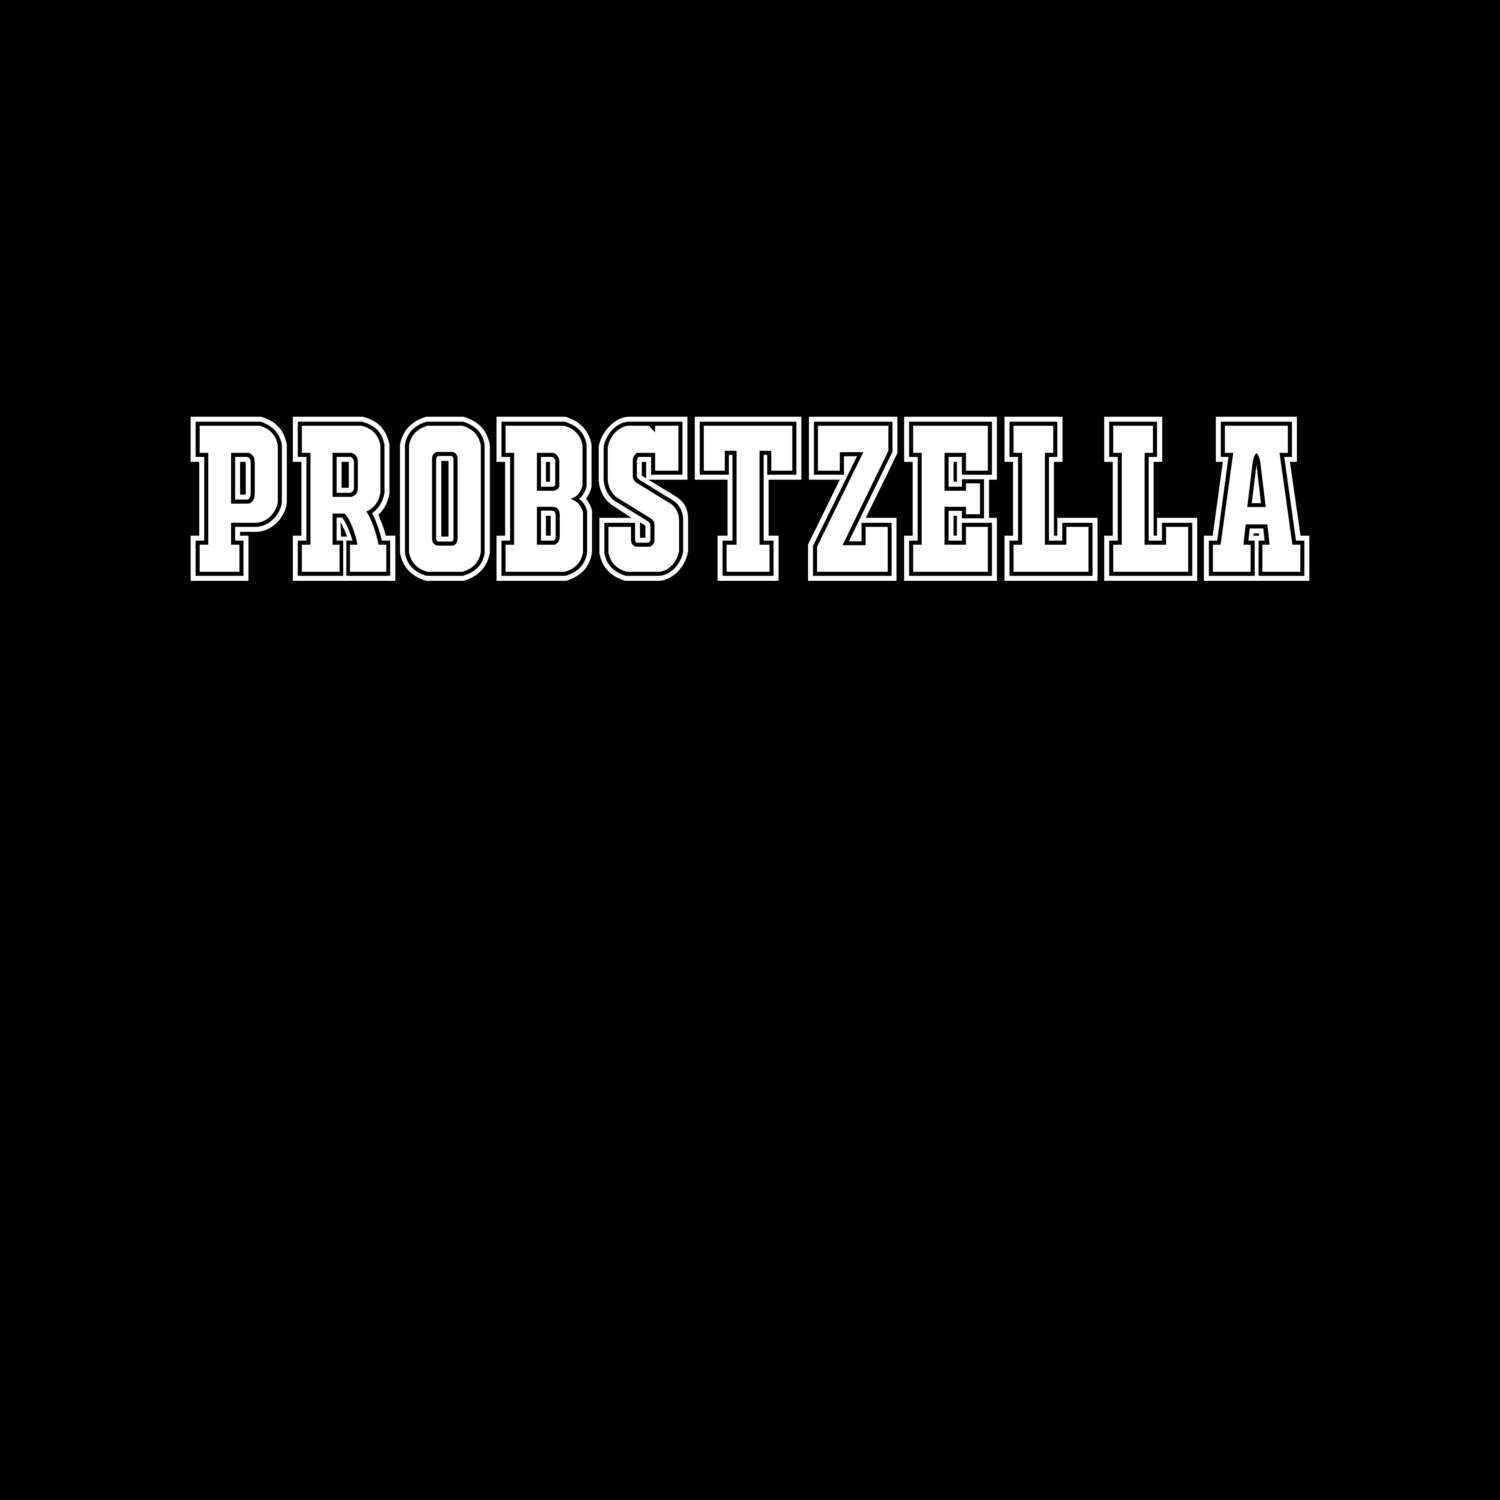 Probstzella T-Shirt »Classic«